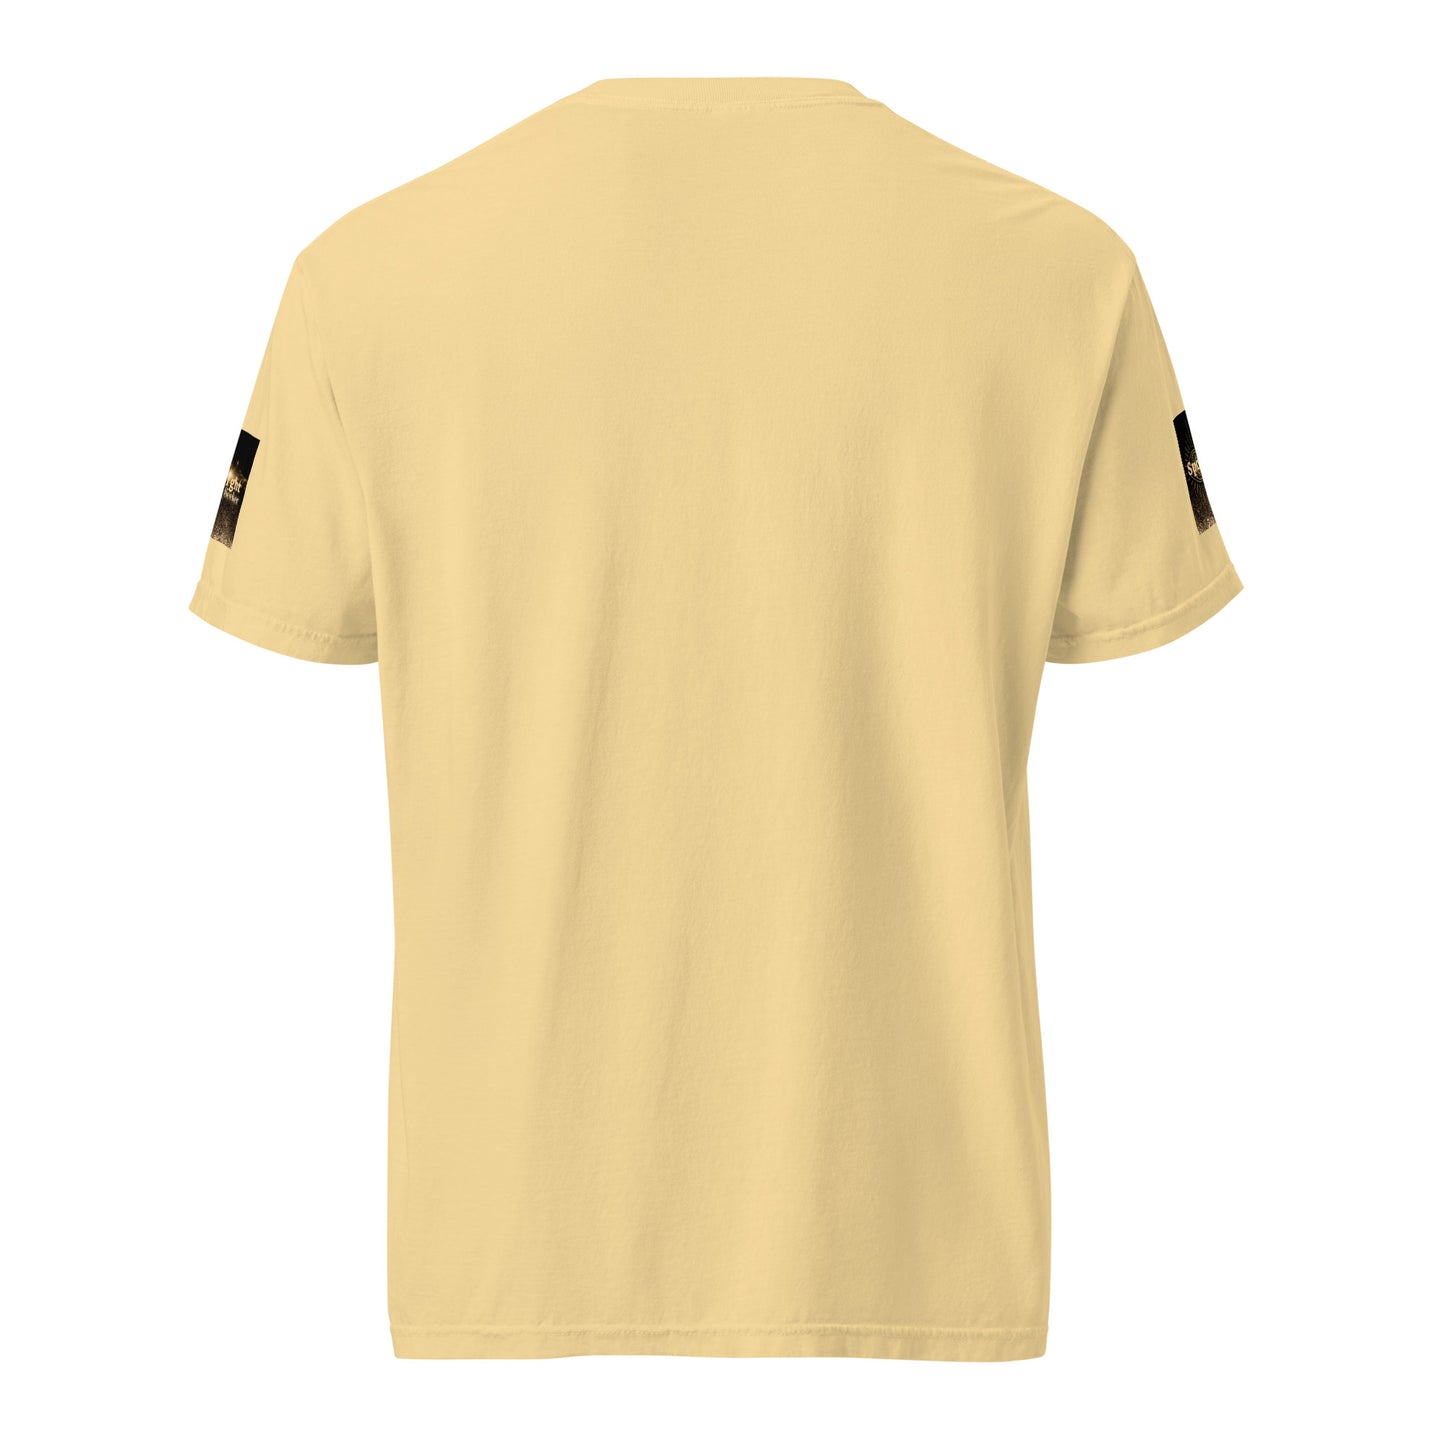 Tell 'Em/Fan Heavyweight Unisex T-Shirt w/Signature SpotlYght Tags - Black